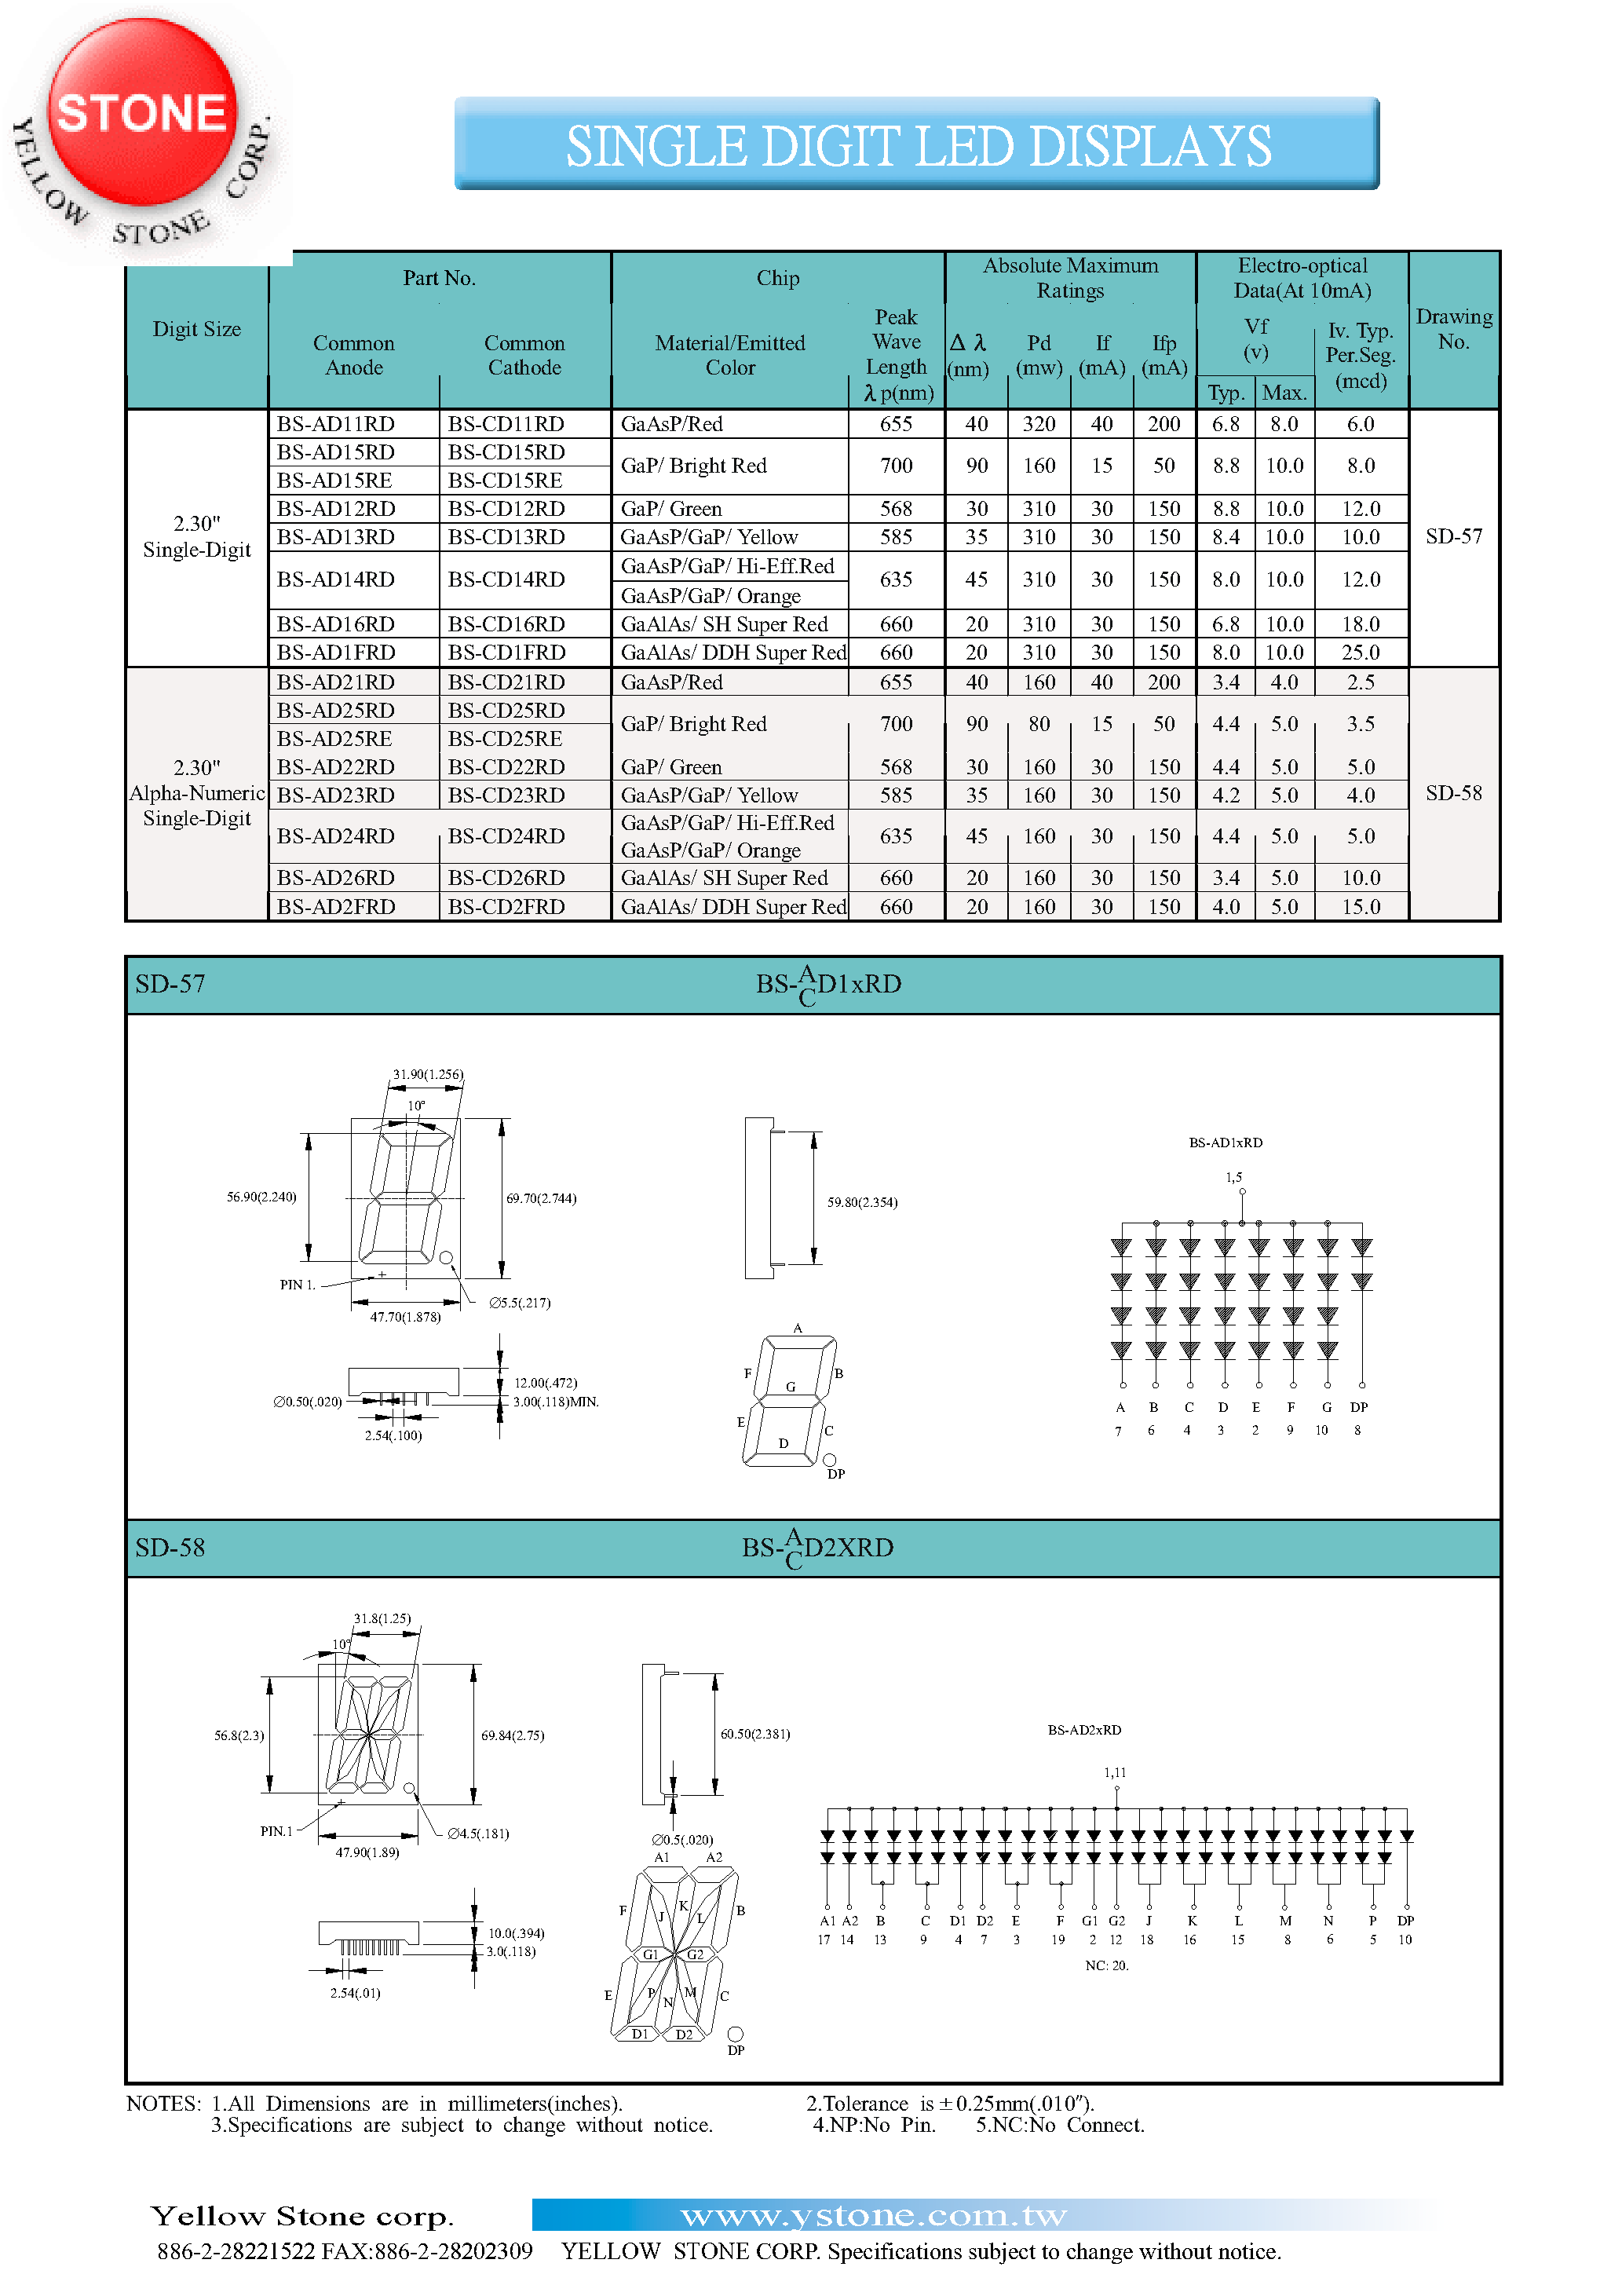 Datasheet BS-CD25RD - SINGLE DIGIT LED DISPLAYS page 1